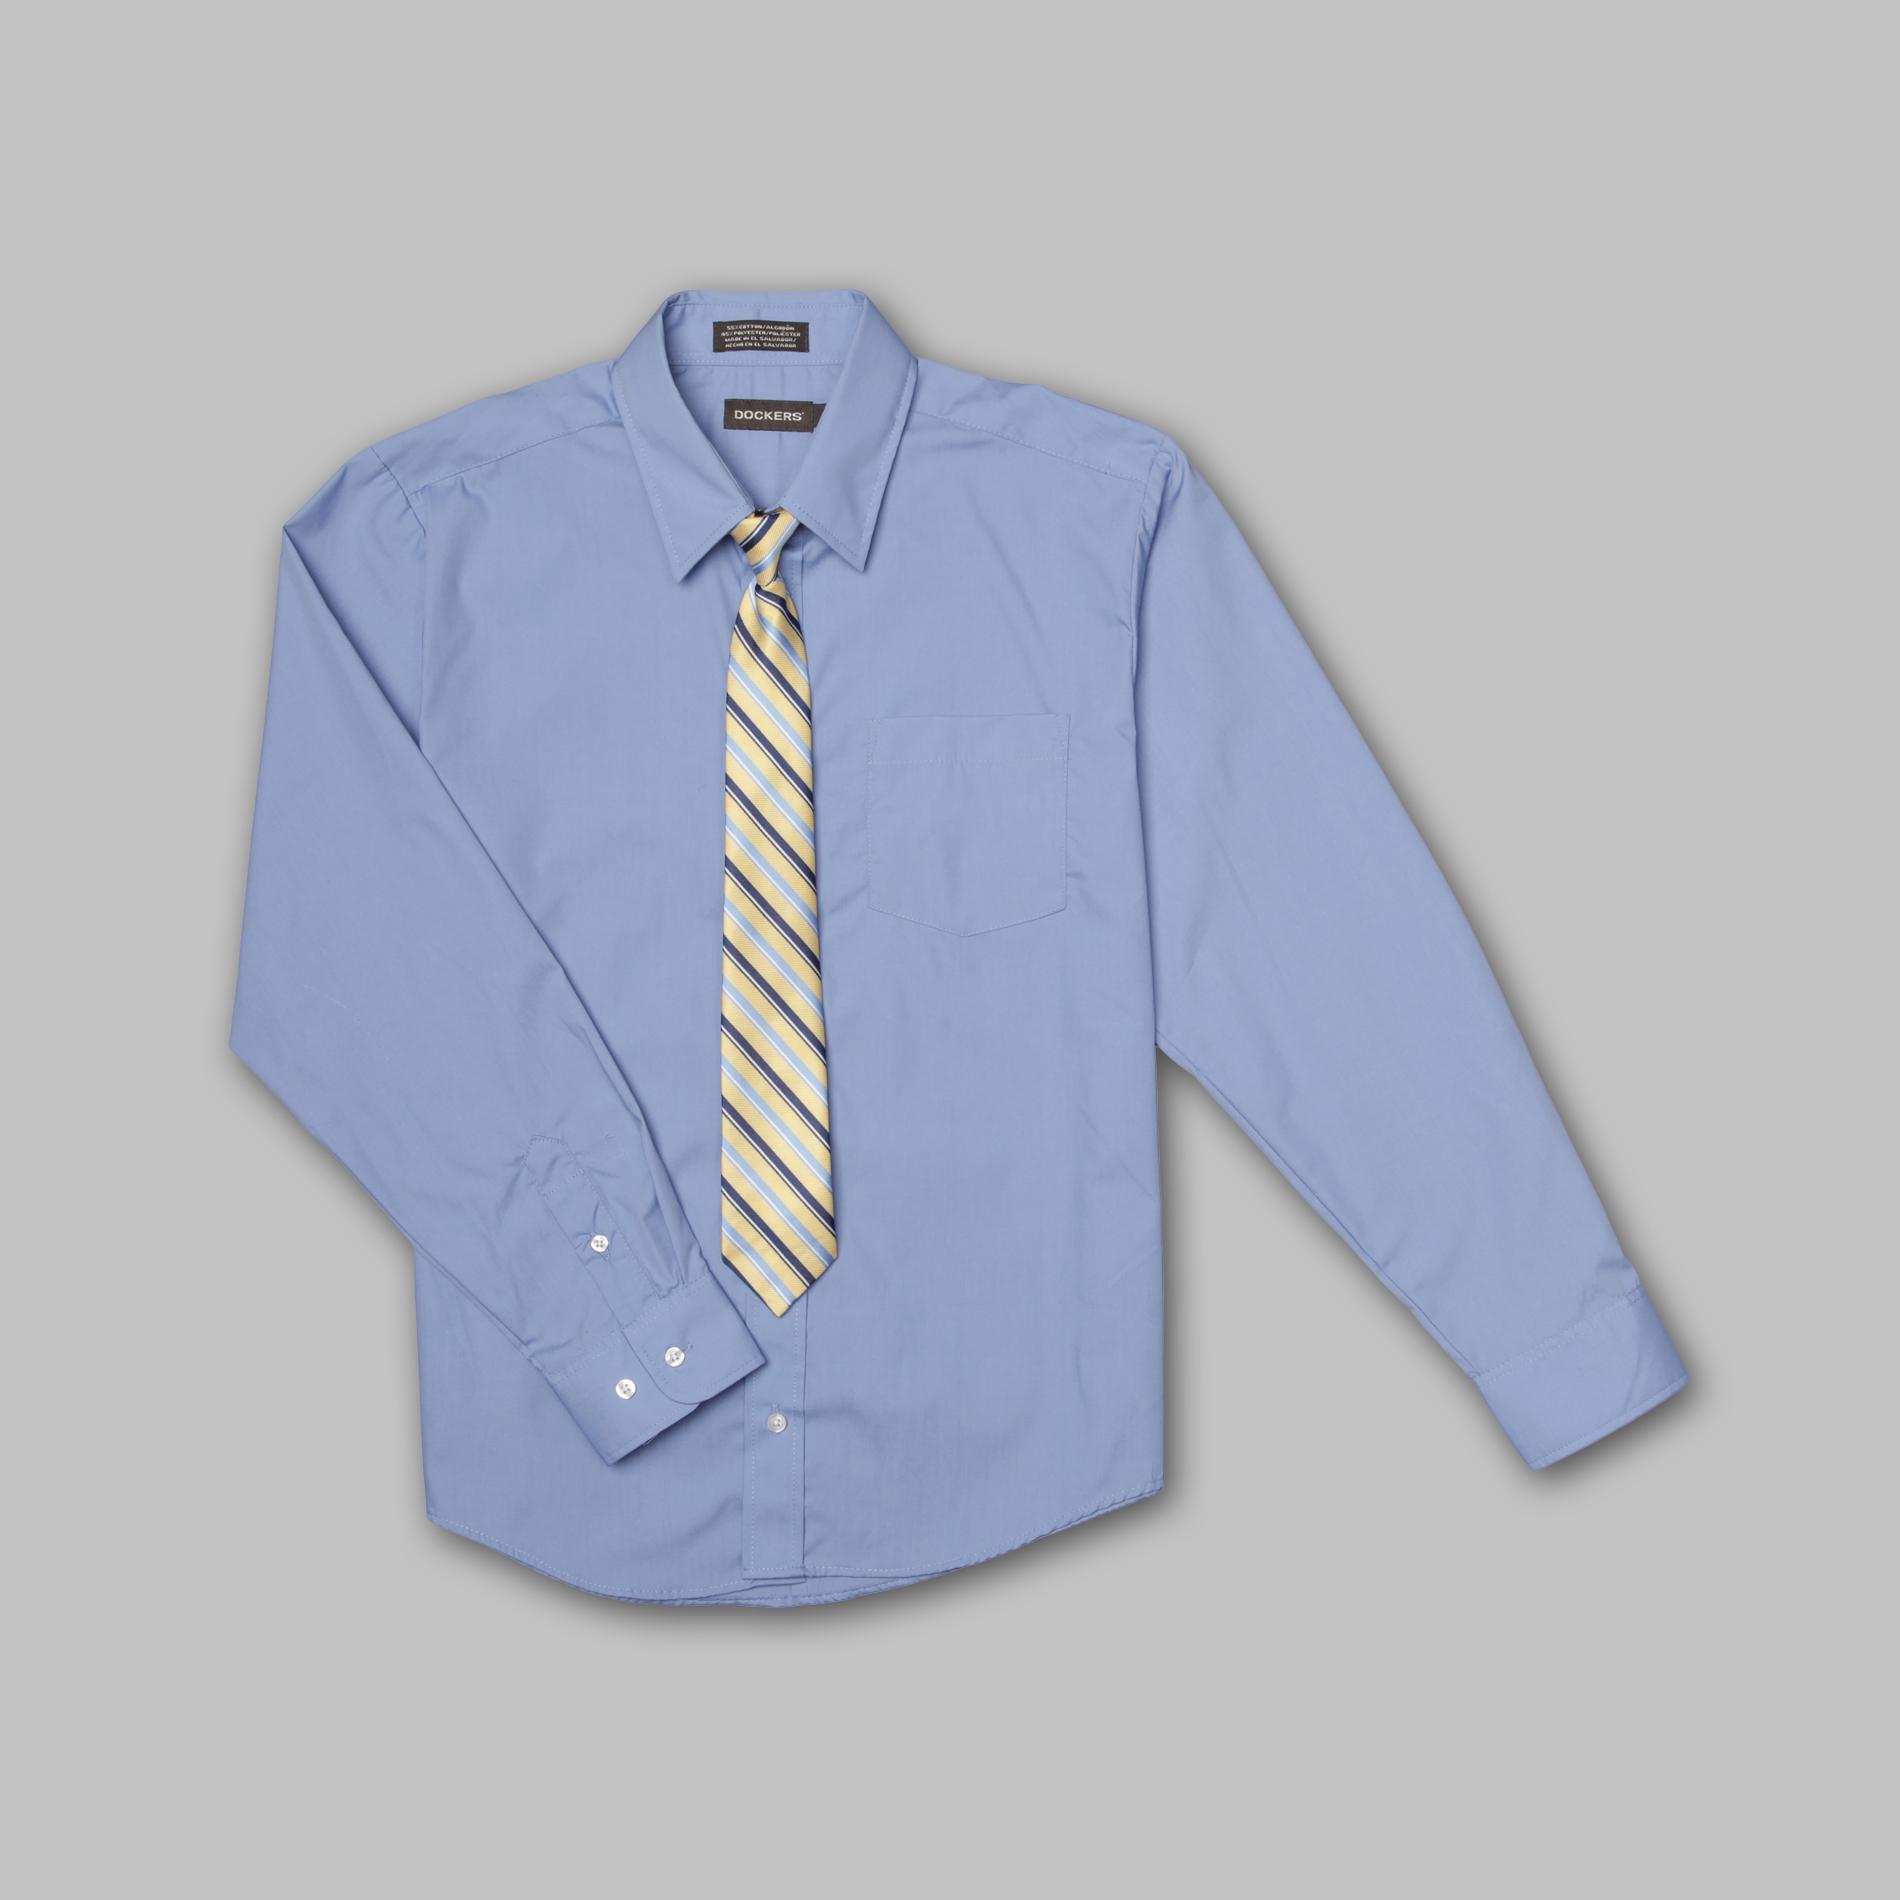 Dockers Boy's Husky Dress Shirt & Tie